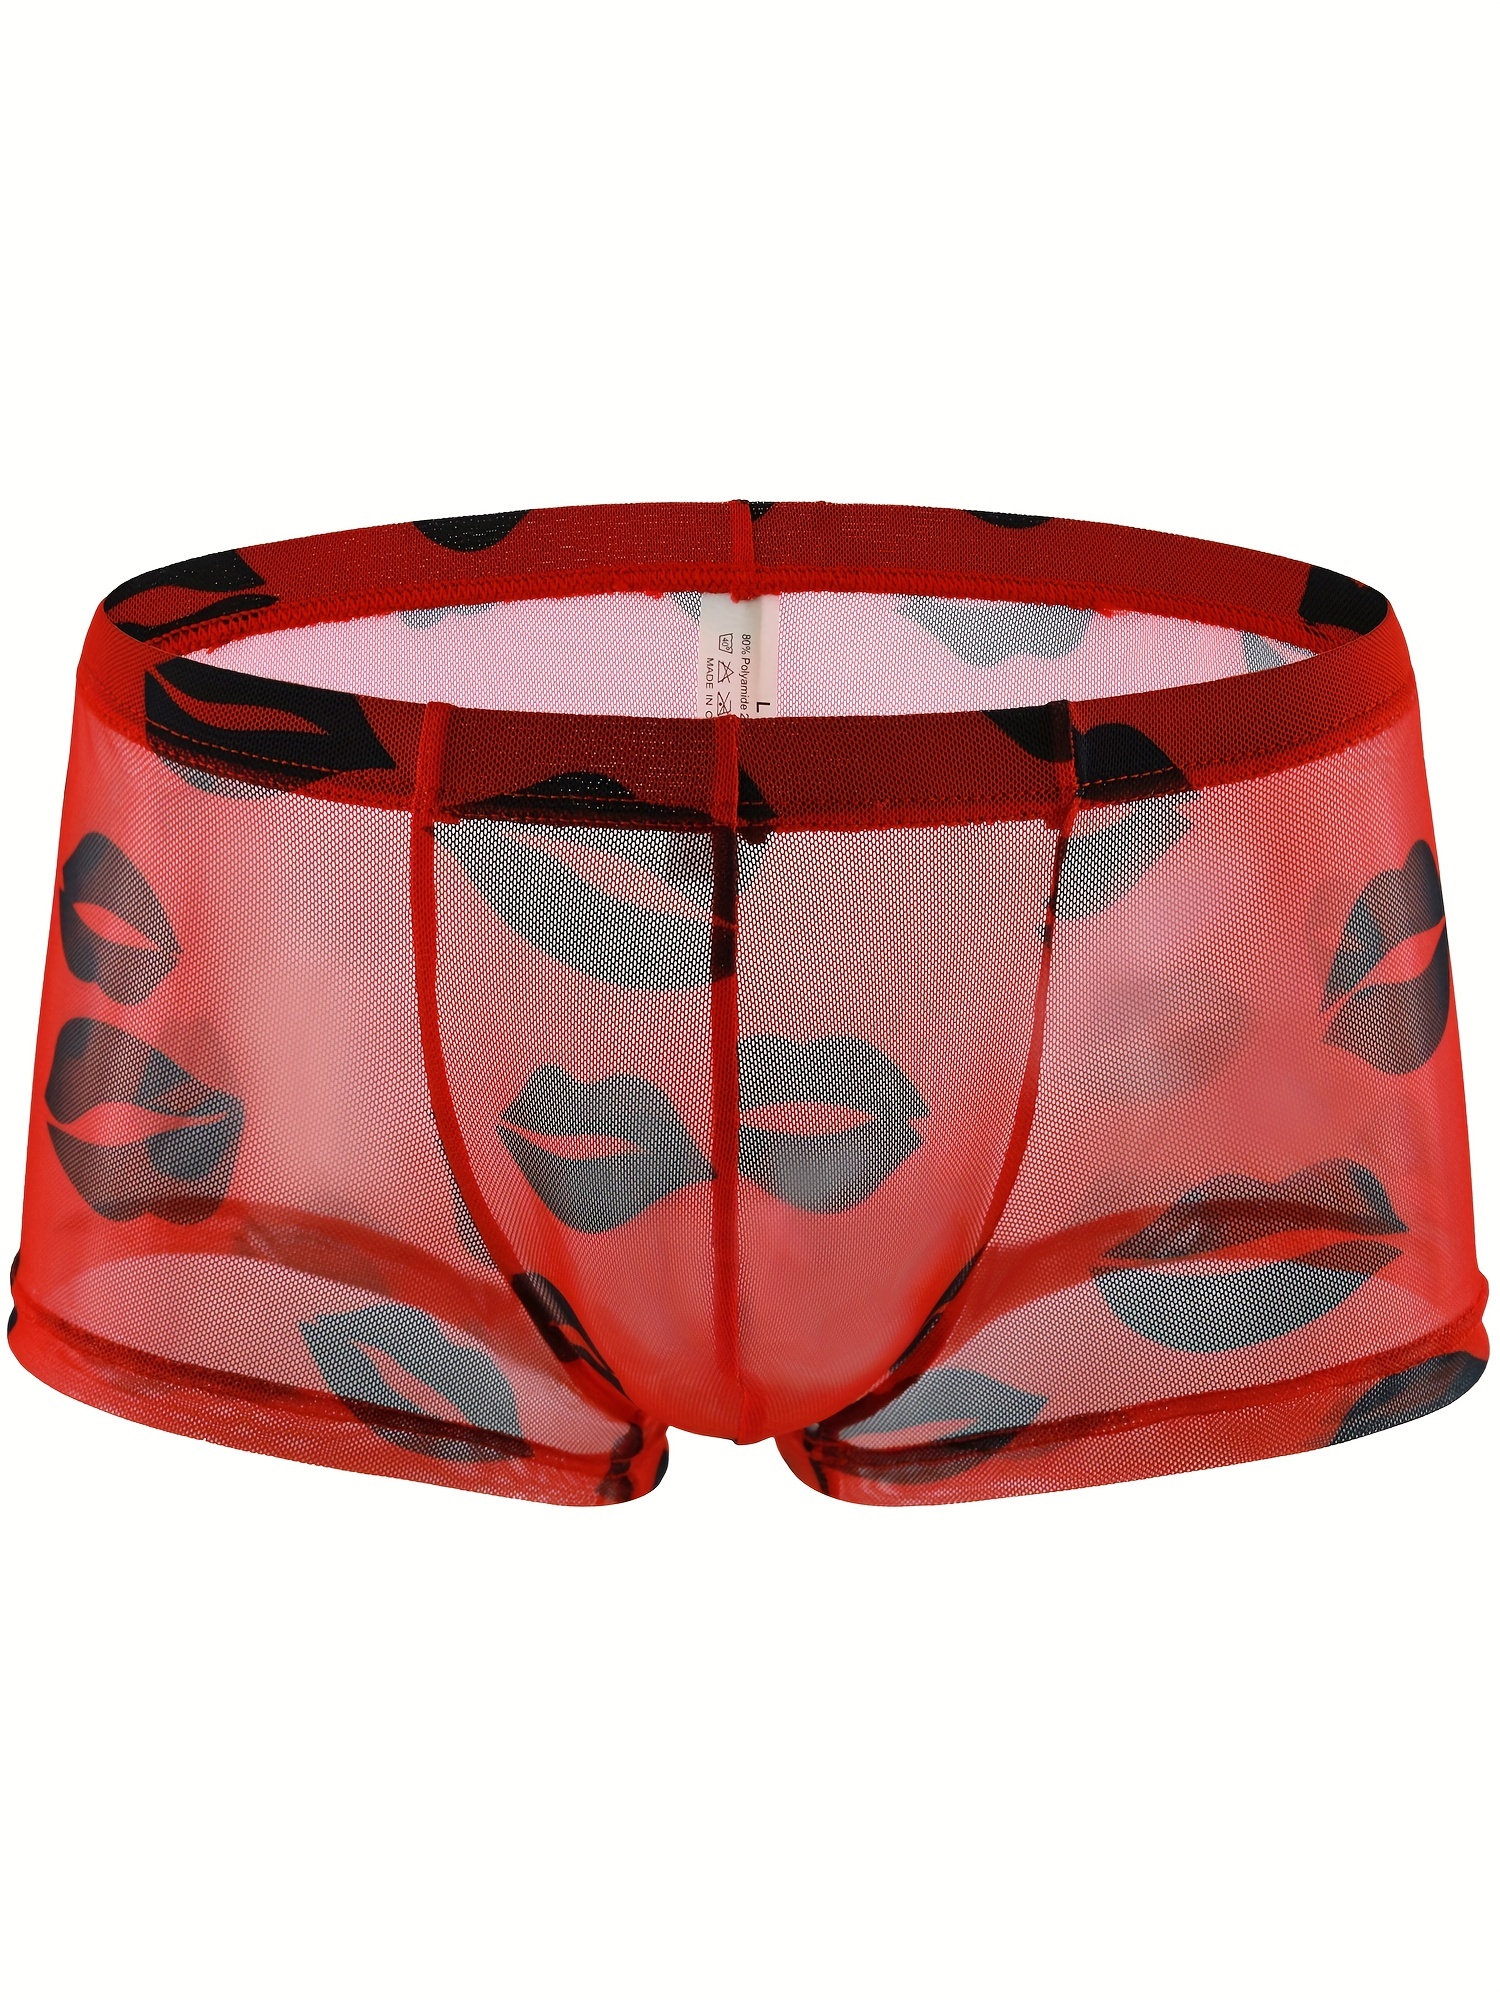 Valentine's Day Gifts for Him Meitianfacai Mens Underwear Men's Fashion  Boxer Shorts Mesh Breathable Underpants 